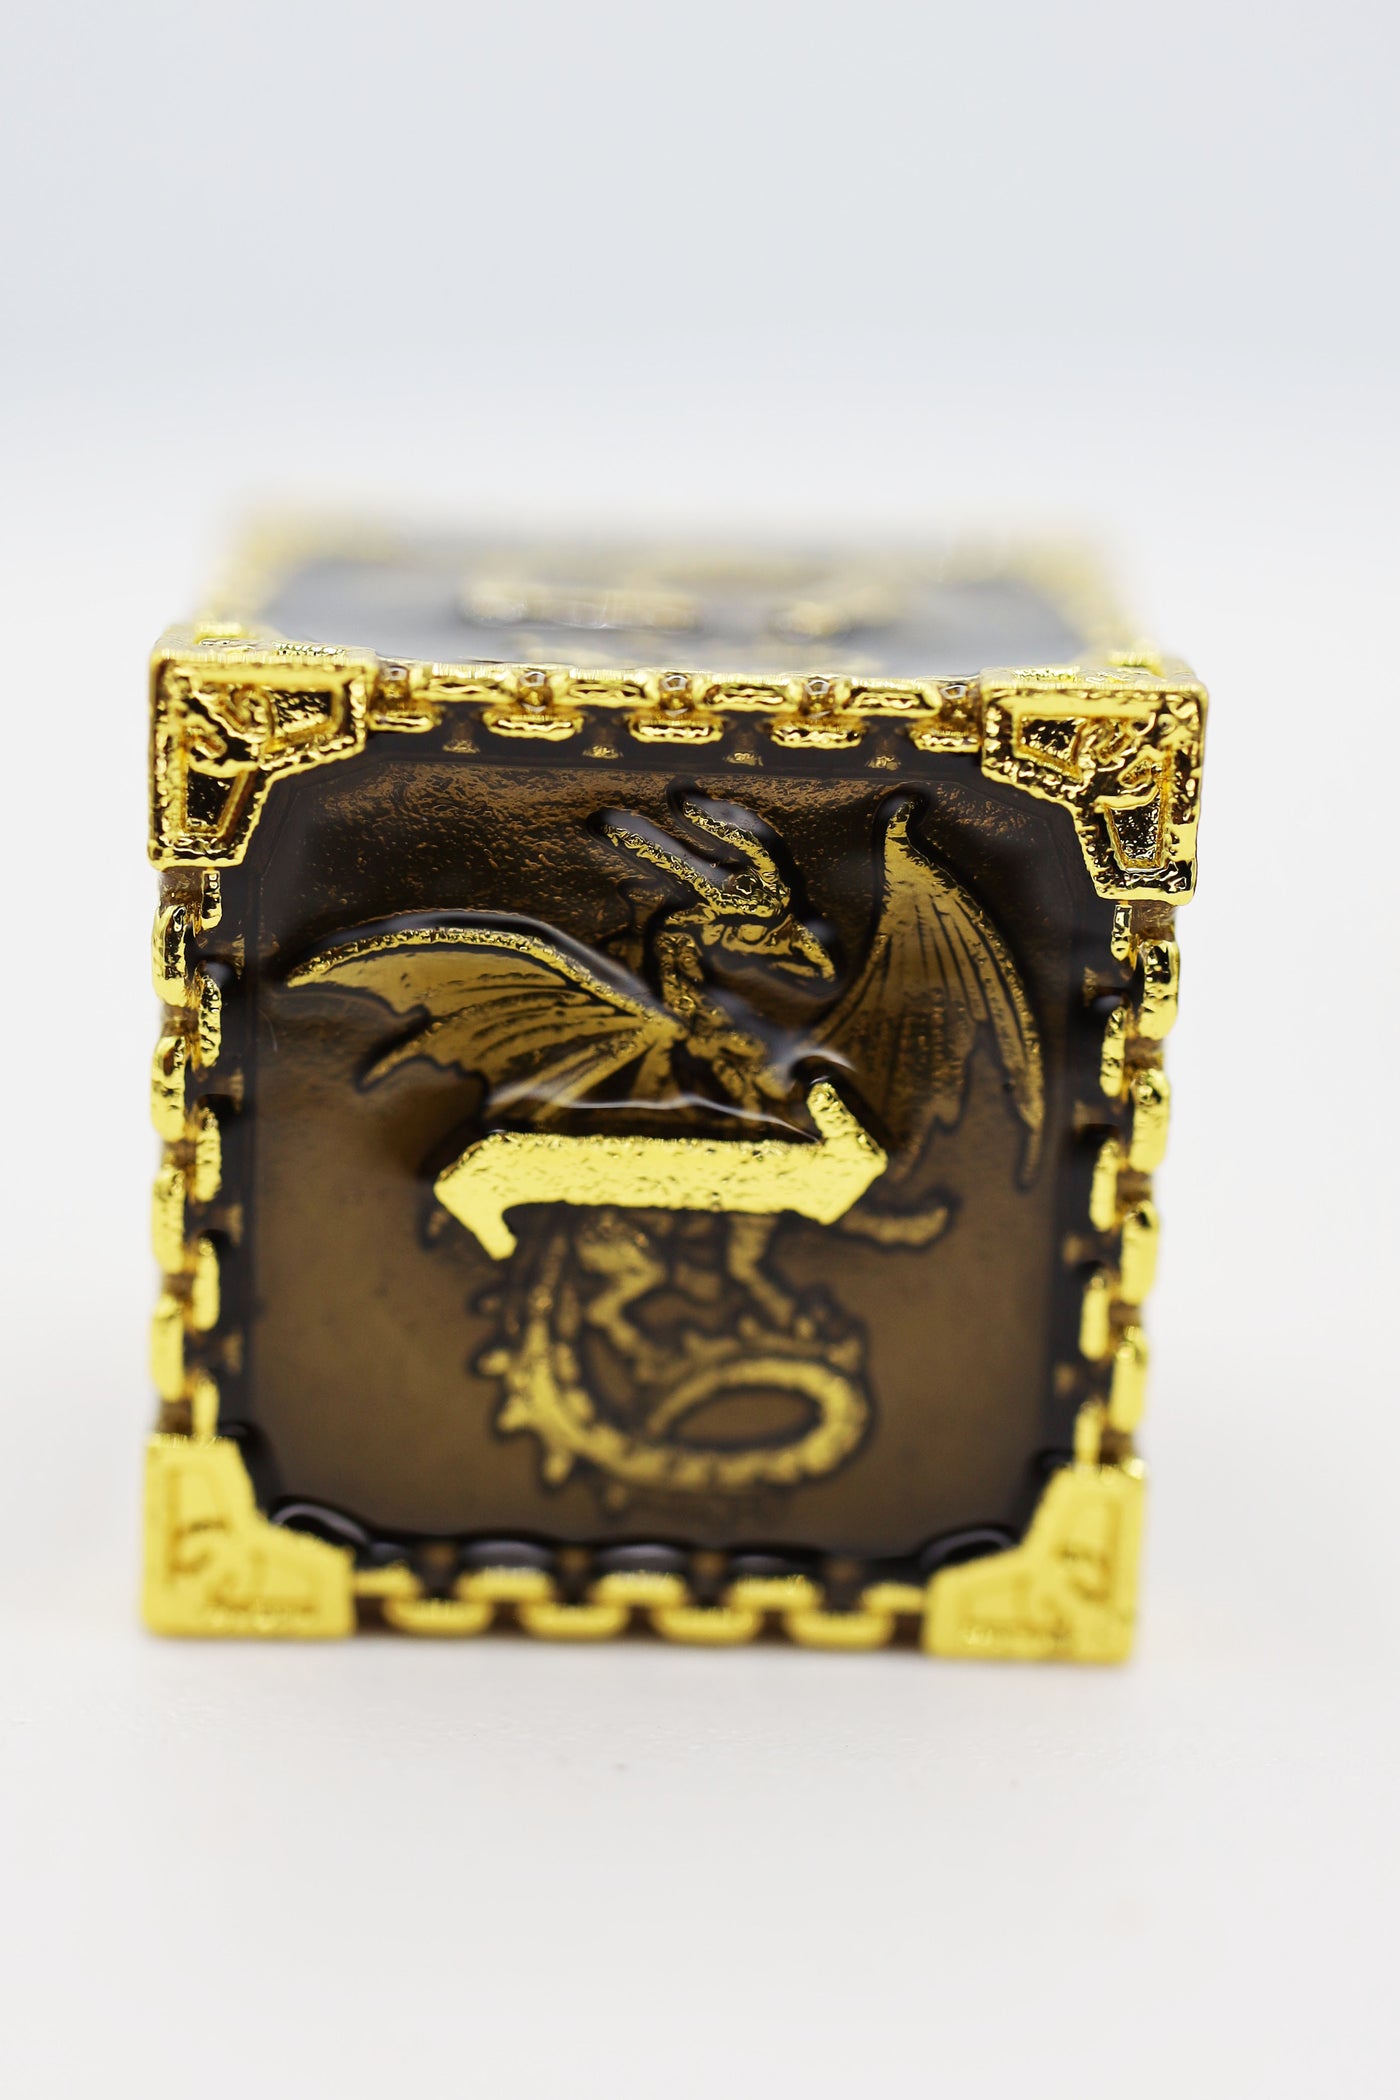 Dragon Essence: Gold Void - Metal RPG Dice Set Metal Dice Foam Brain Games